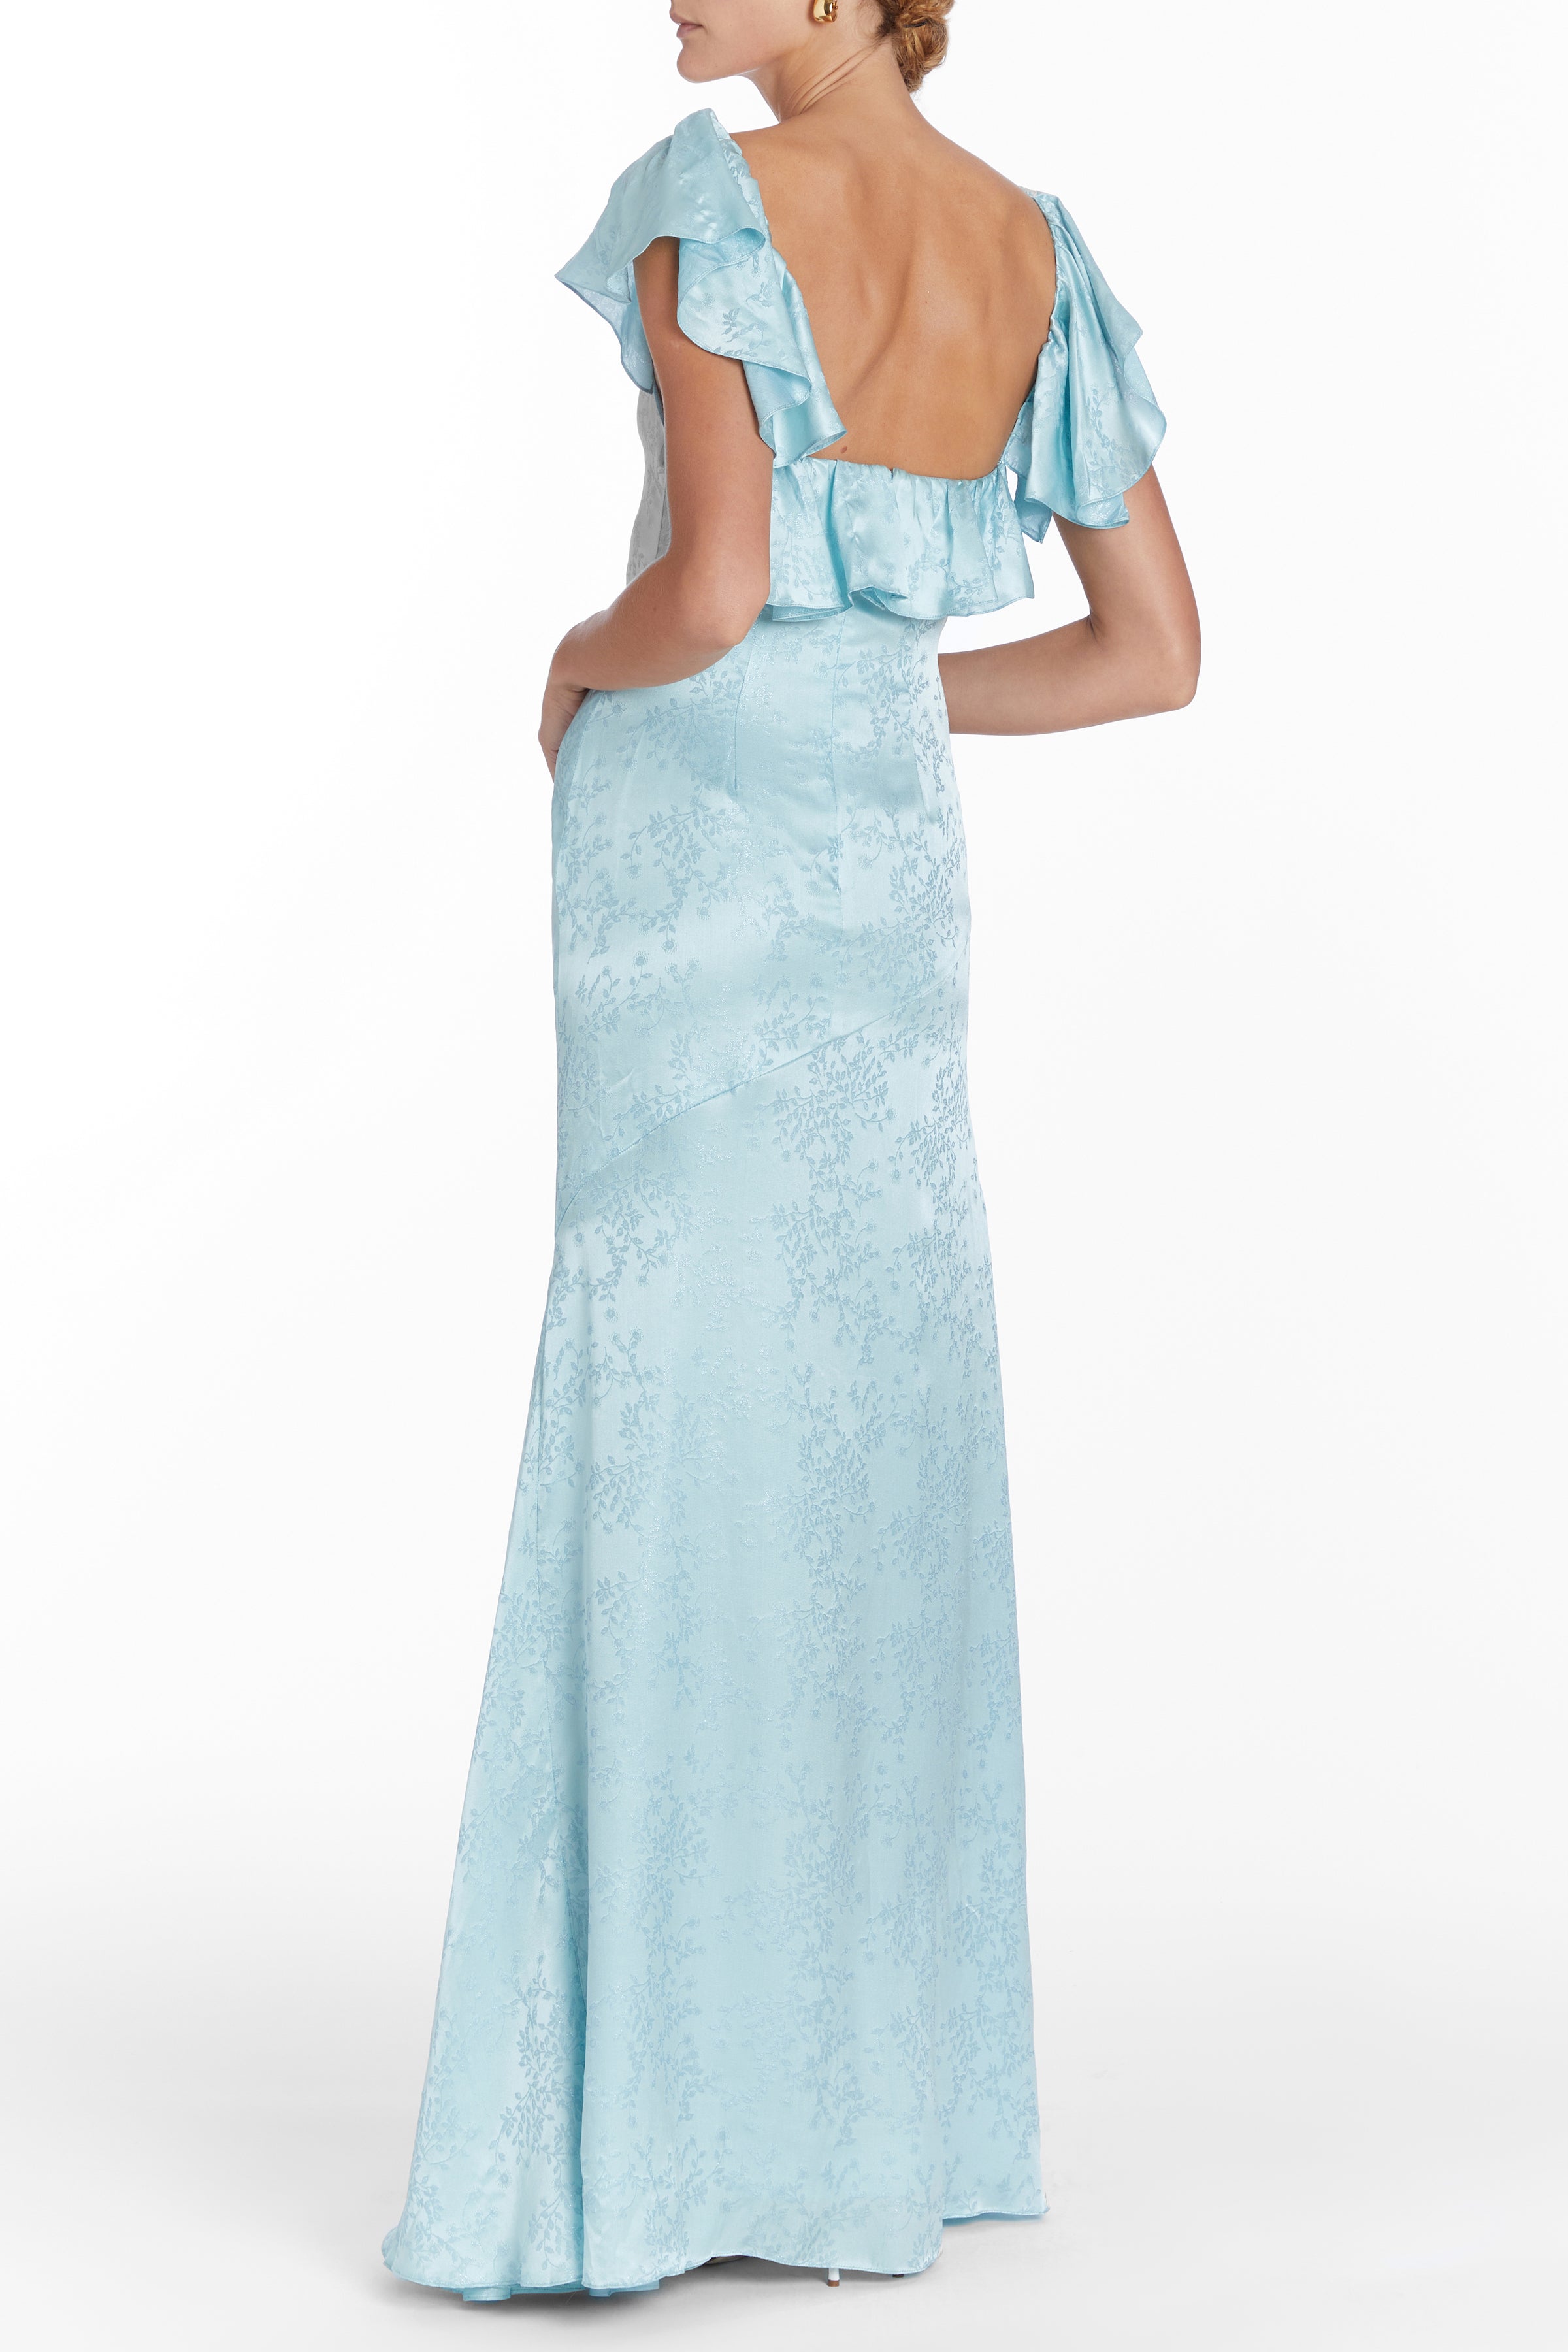 Royal blue velvet dress with structured sleeve